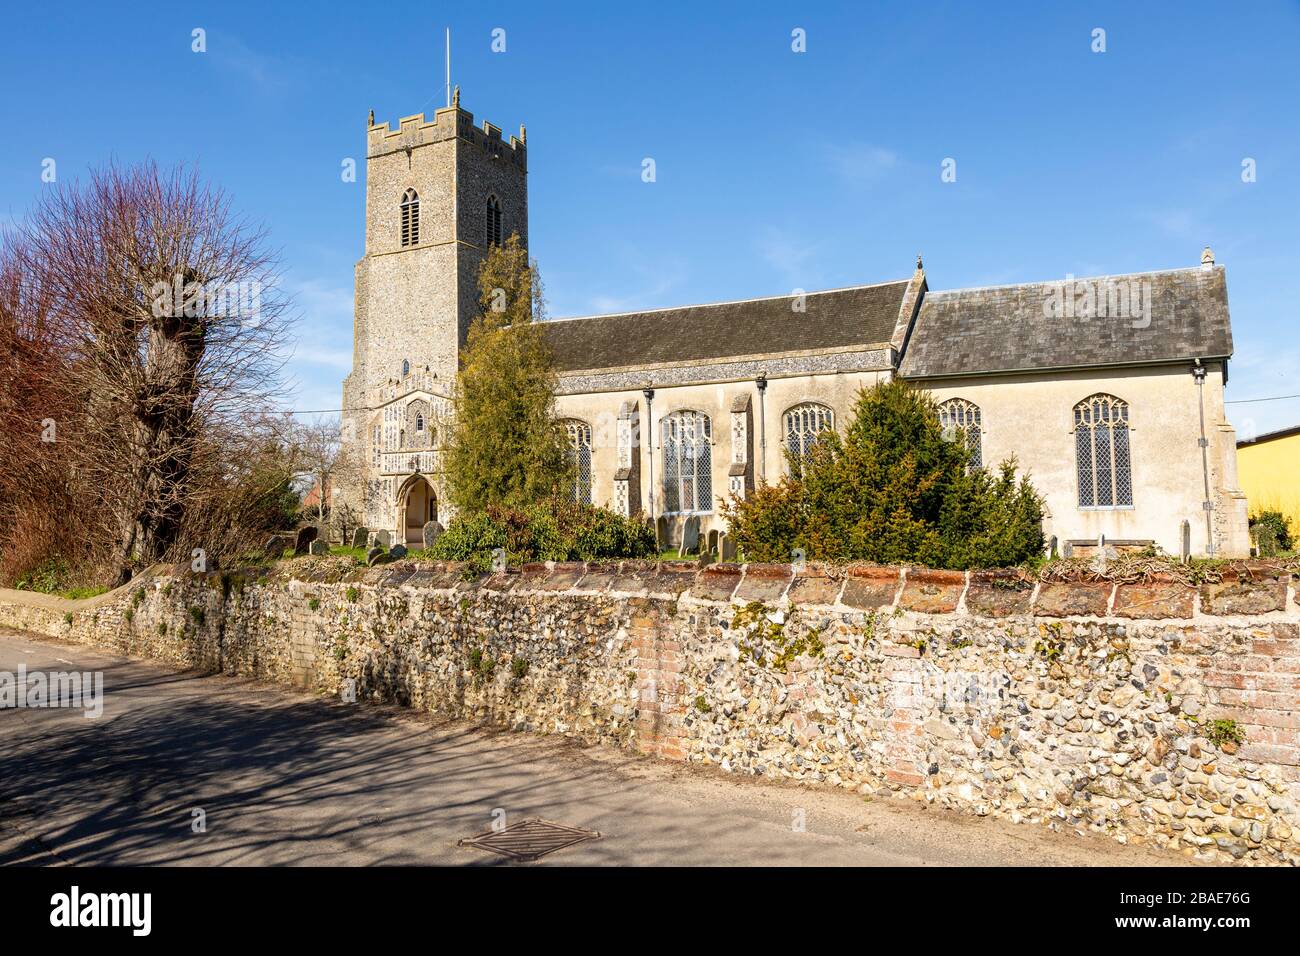 Village parishchurch St John the Baptist, Metfield, Suffolk, England, UK Stock Photo